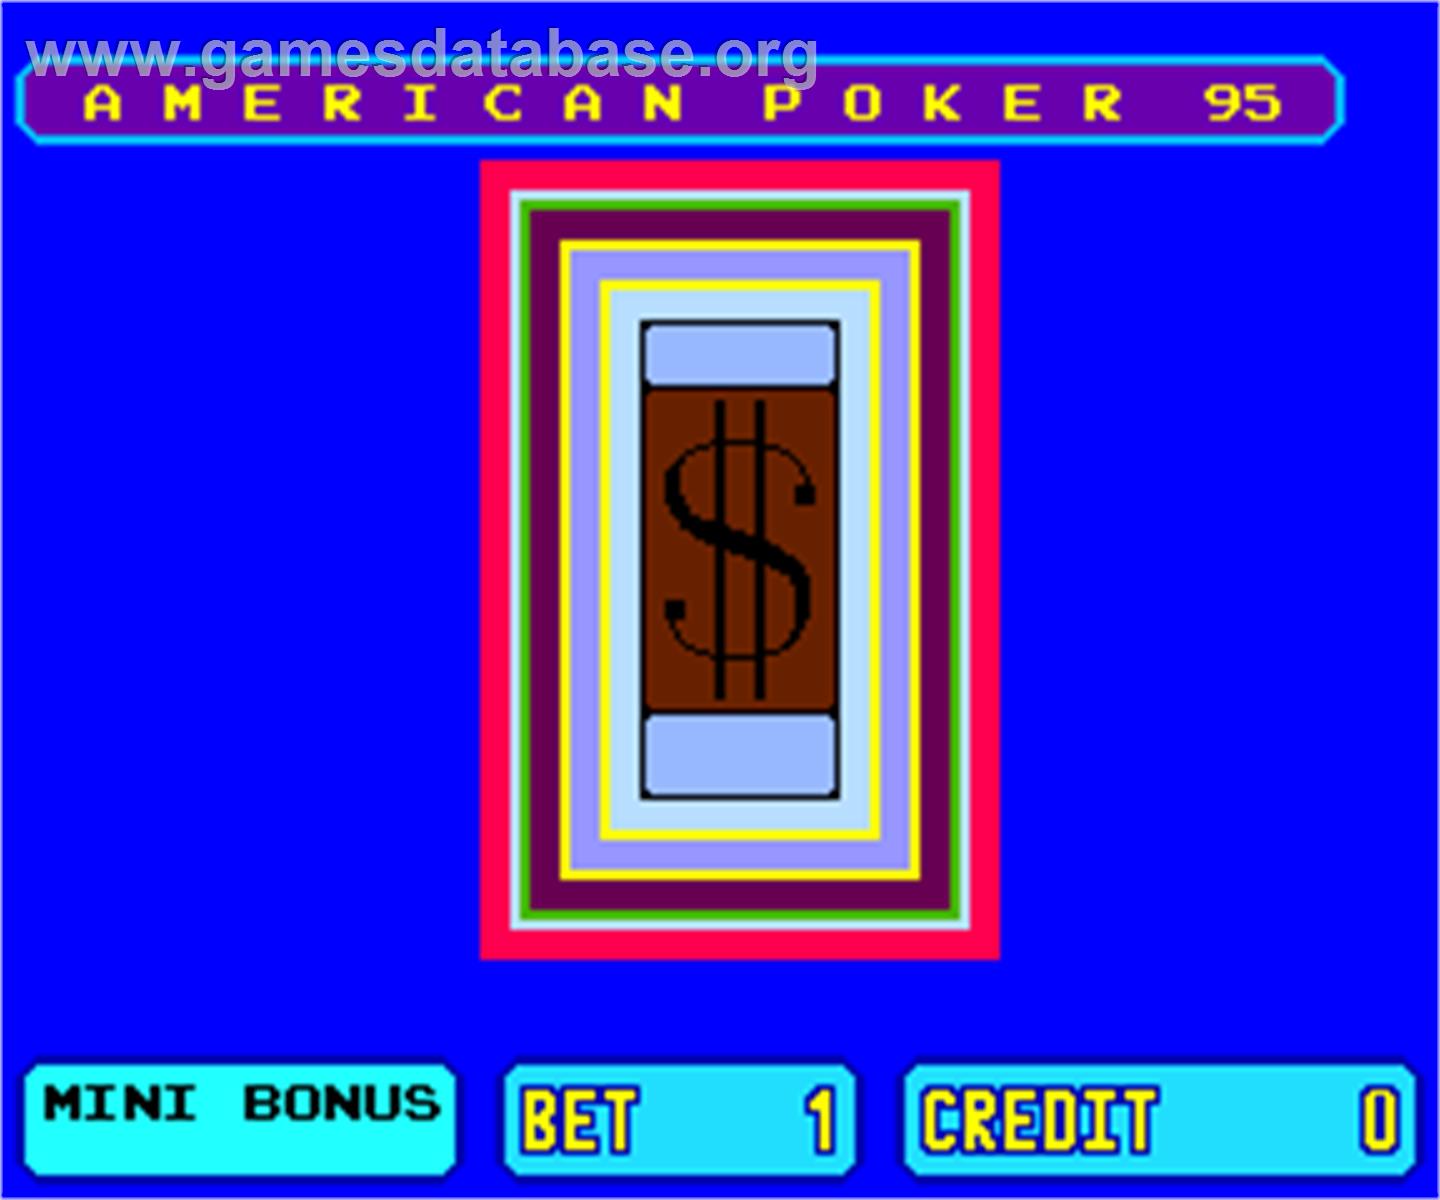 American Poker 95 - Arcade - Artwork - Title Screen